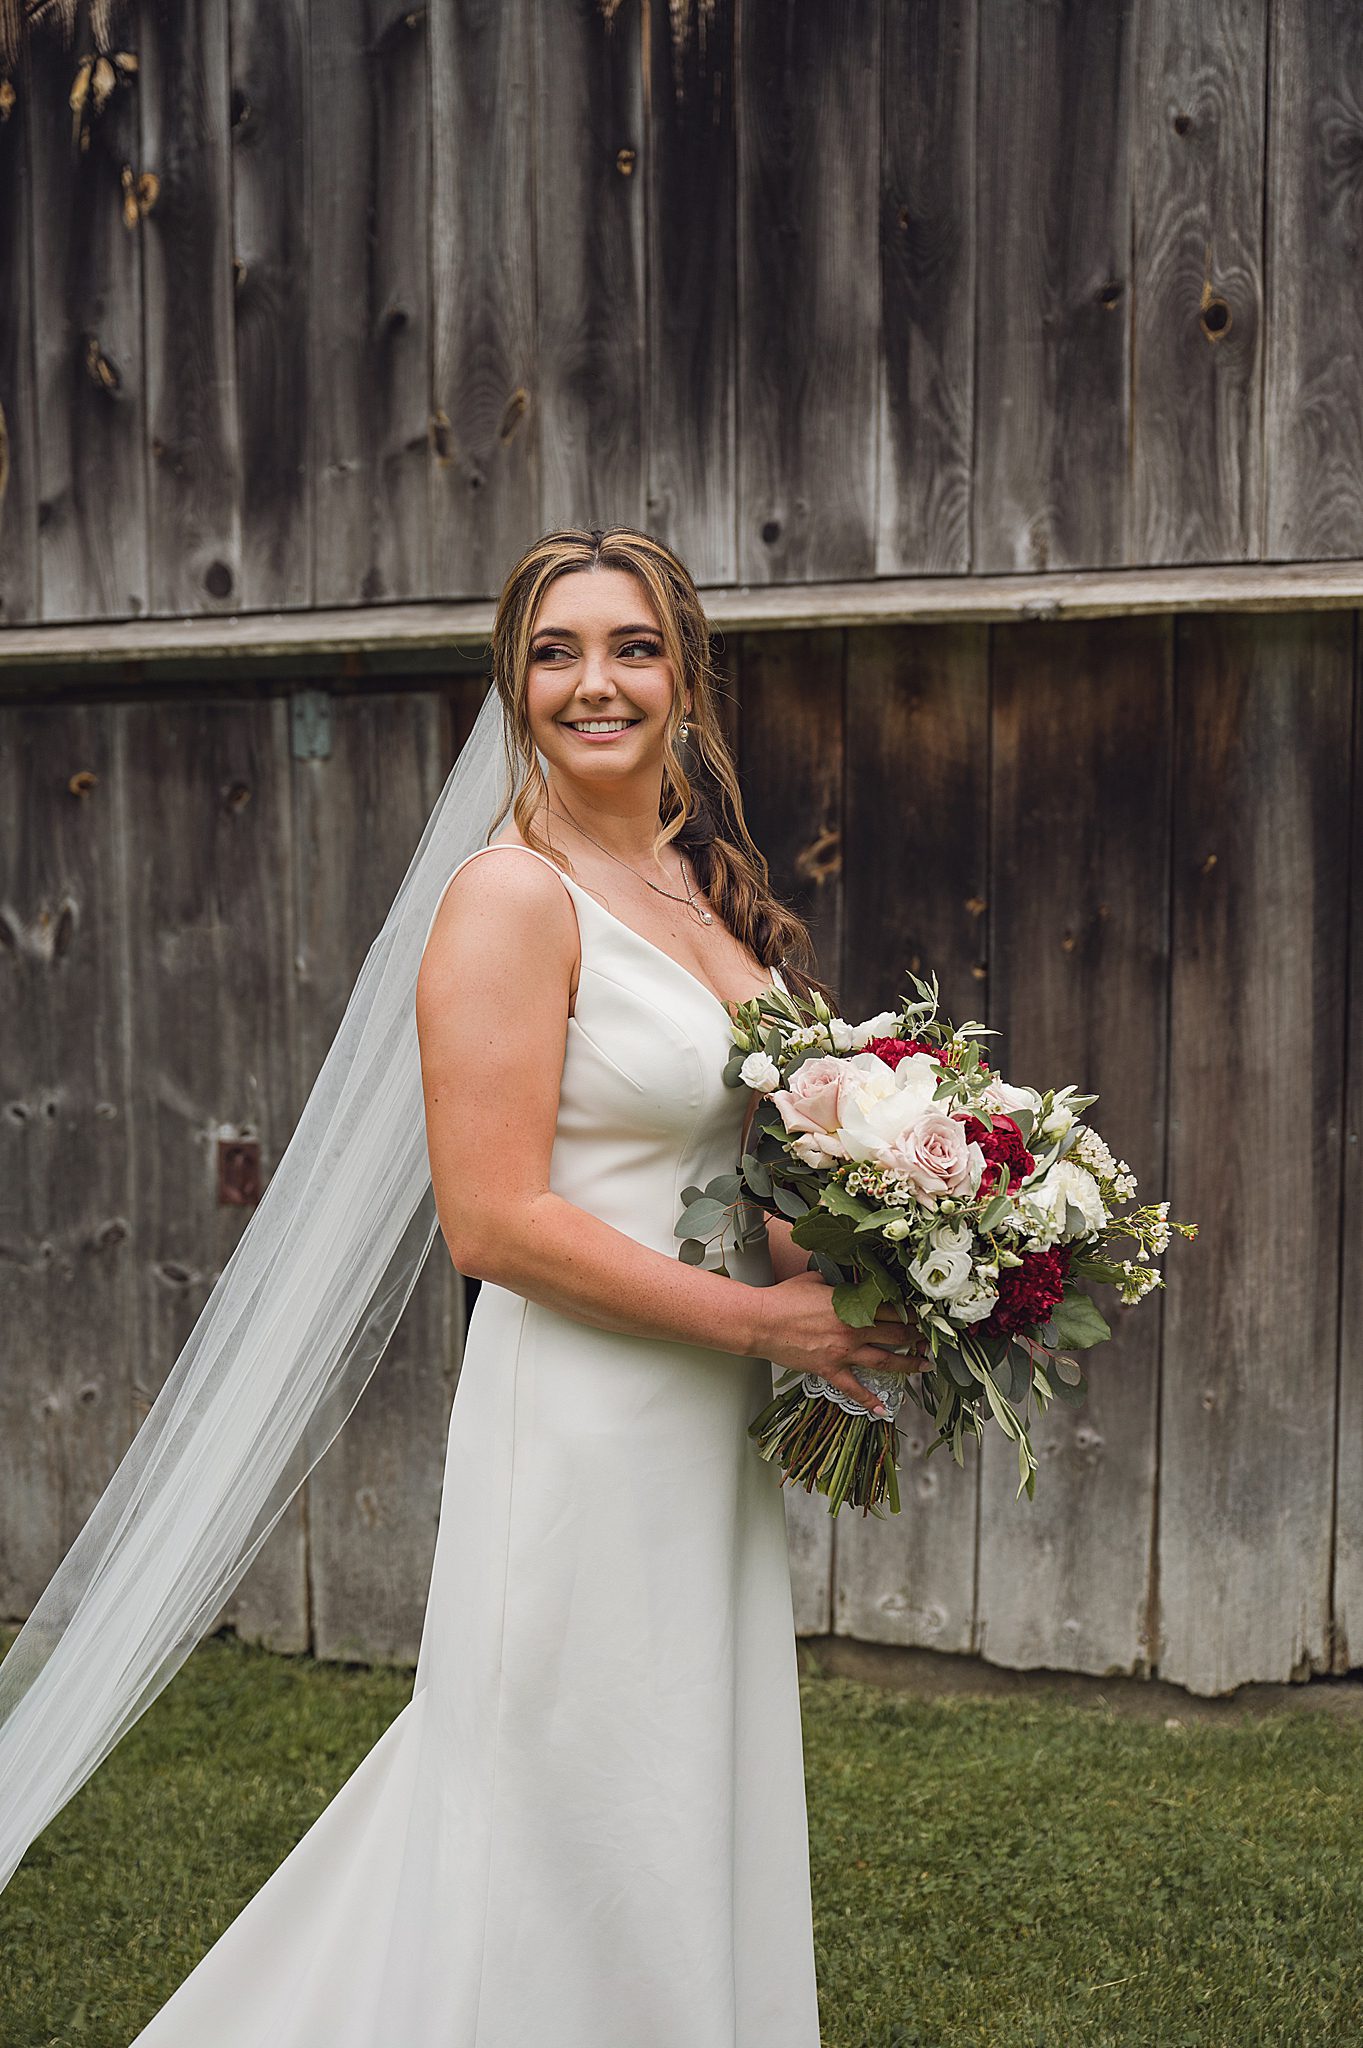 Wrights Mill Farm Wedding, Canterbury, Connecticut Photographer Jesslancephoto